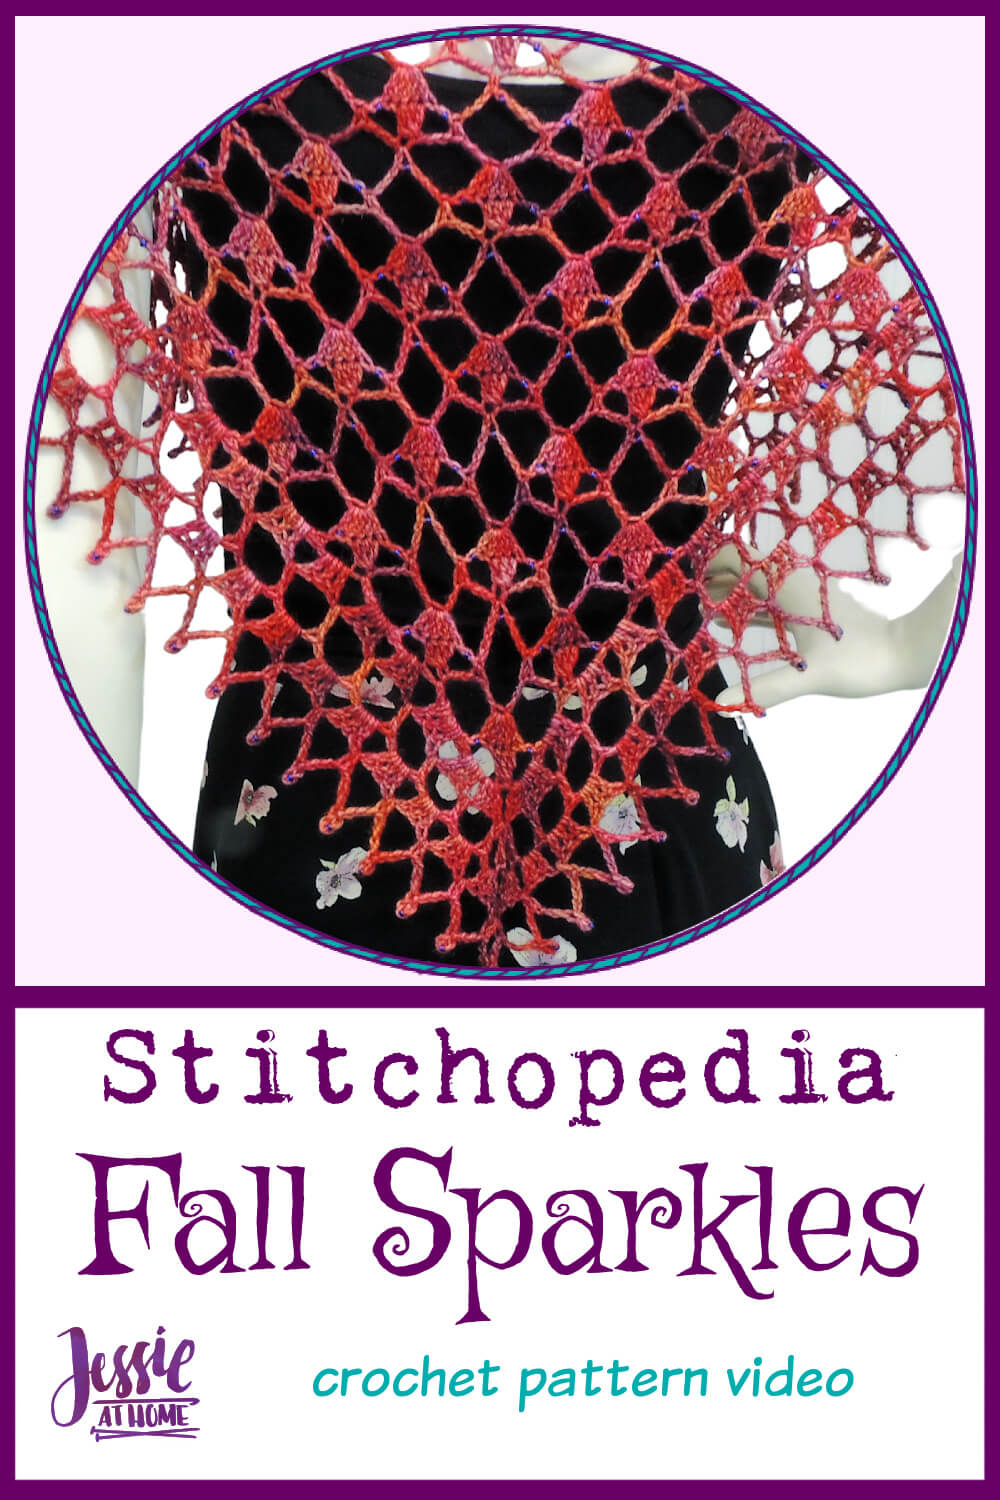 Fall Sparkles Video - beaded crochet shawl pattern tutorial